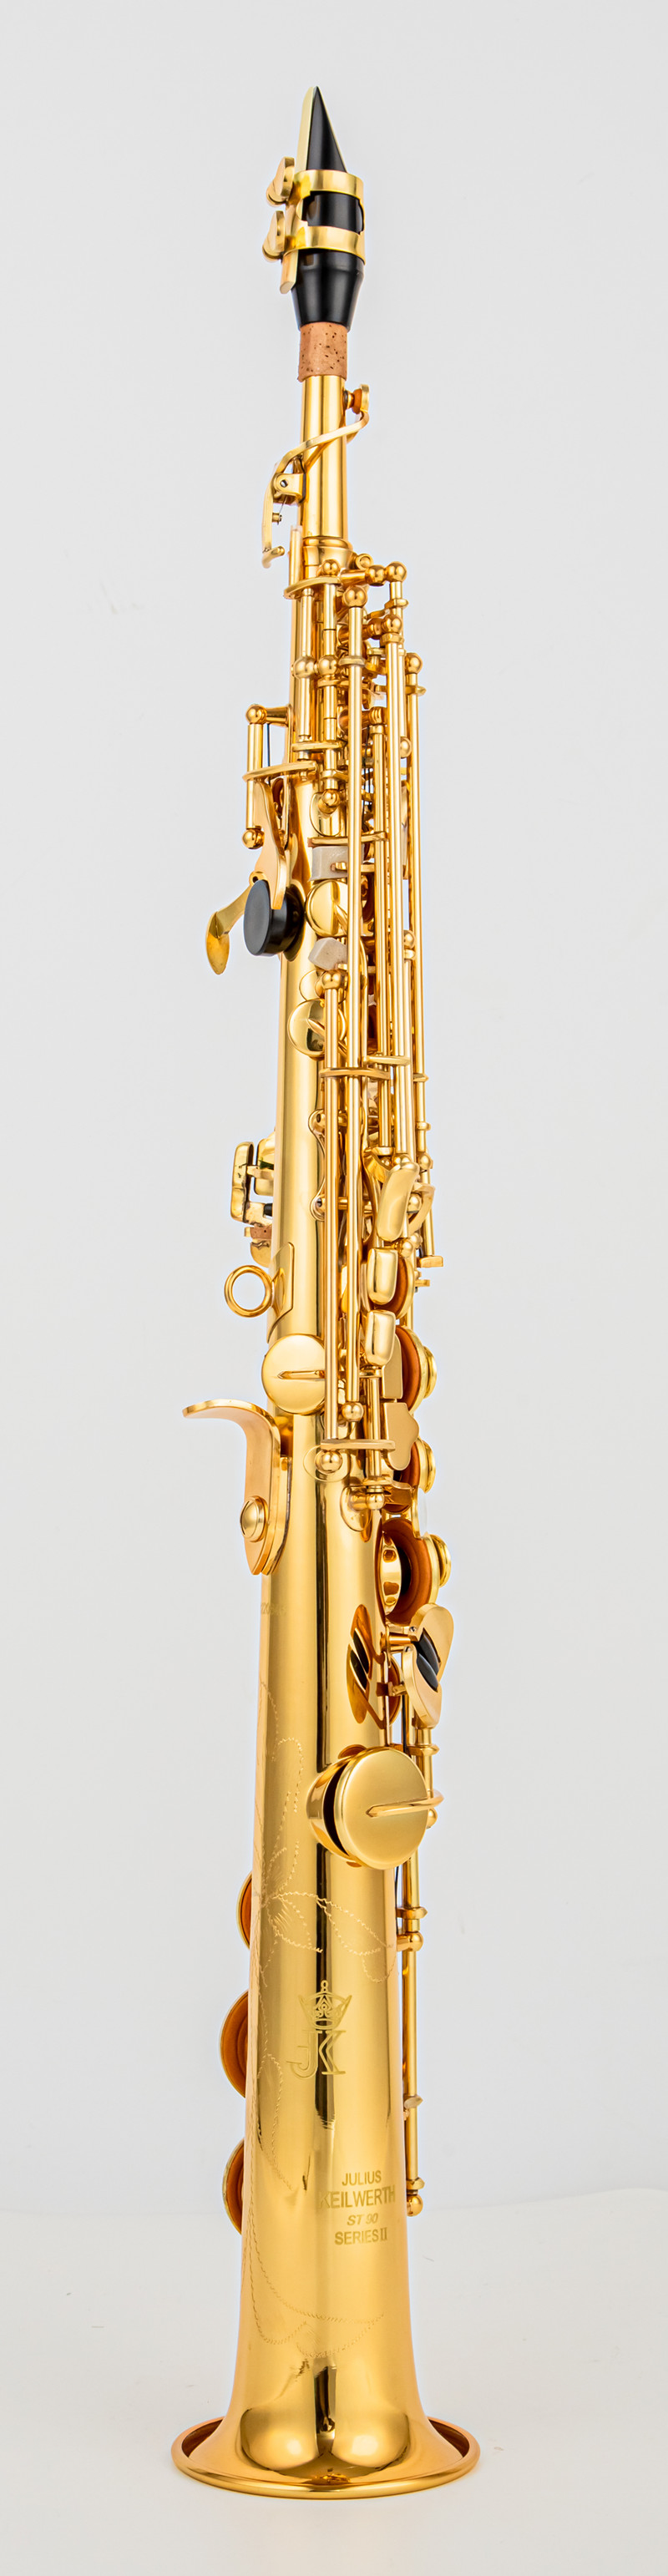 JK Keilwerth SX90II Saxophone Soprano or Nickel B plat Soprano droit avec deux cols, étui, embout, gants, anches